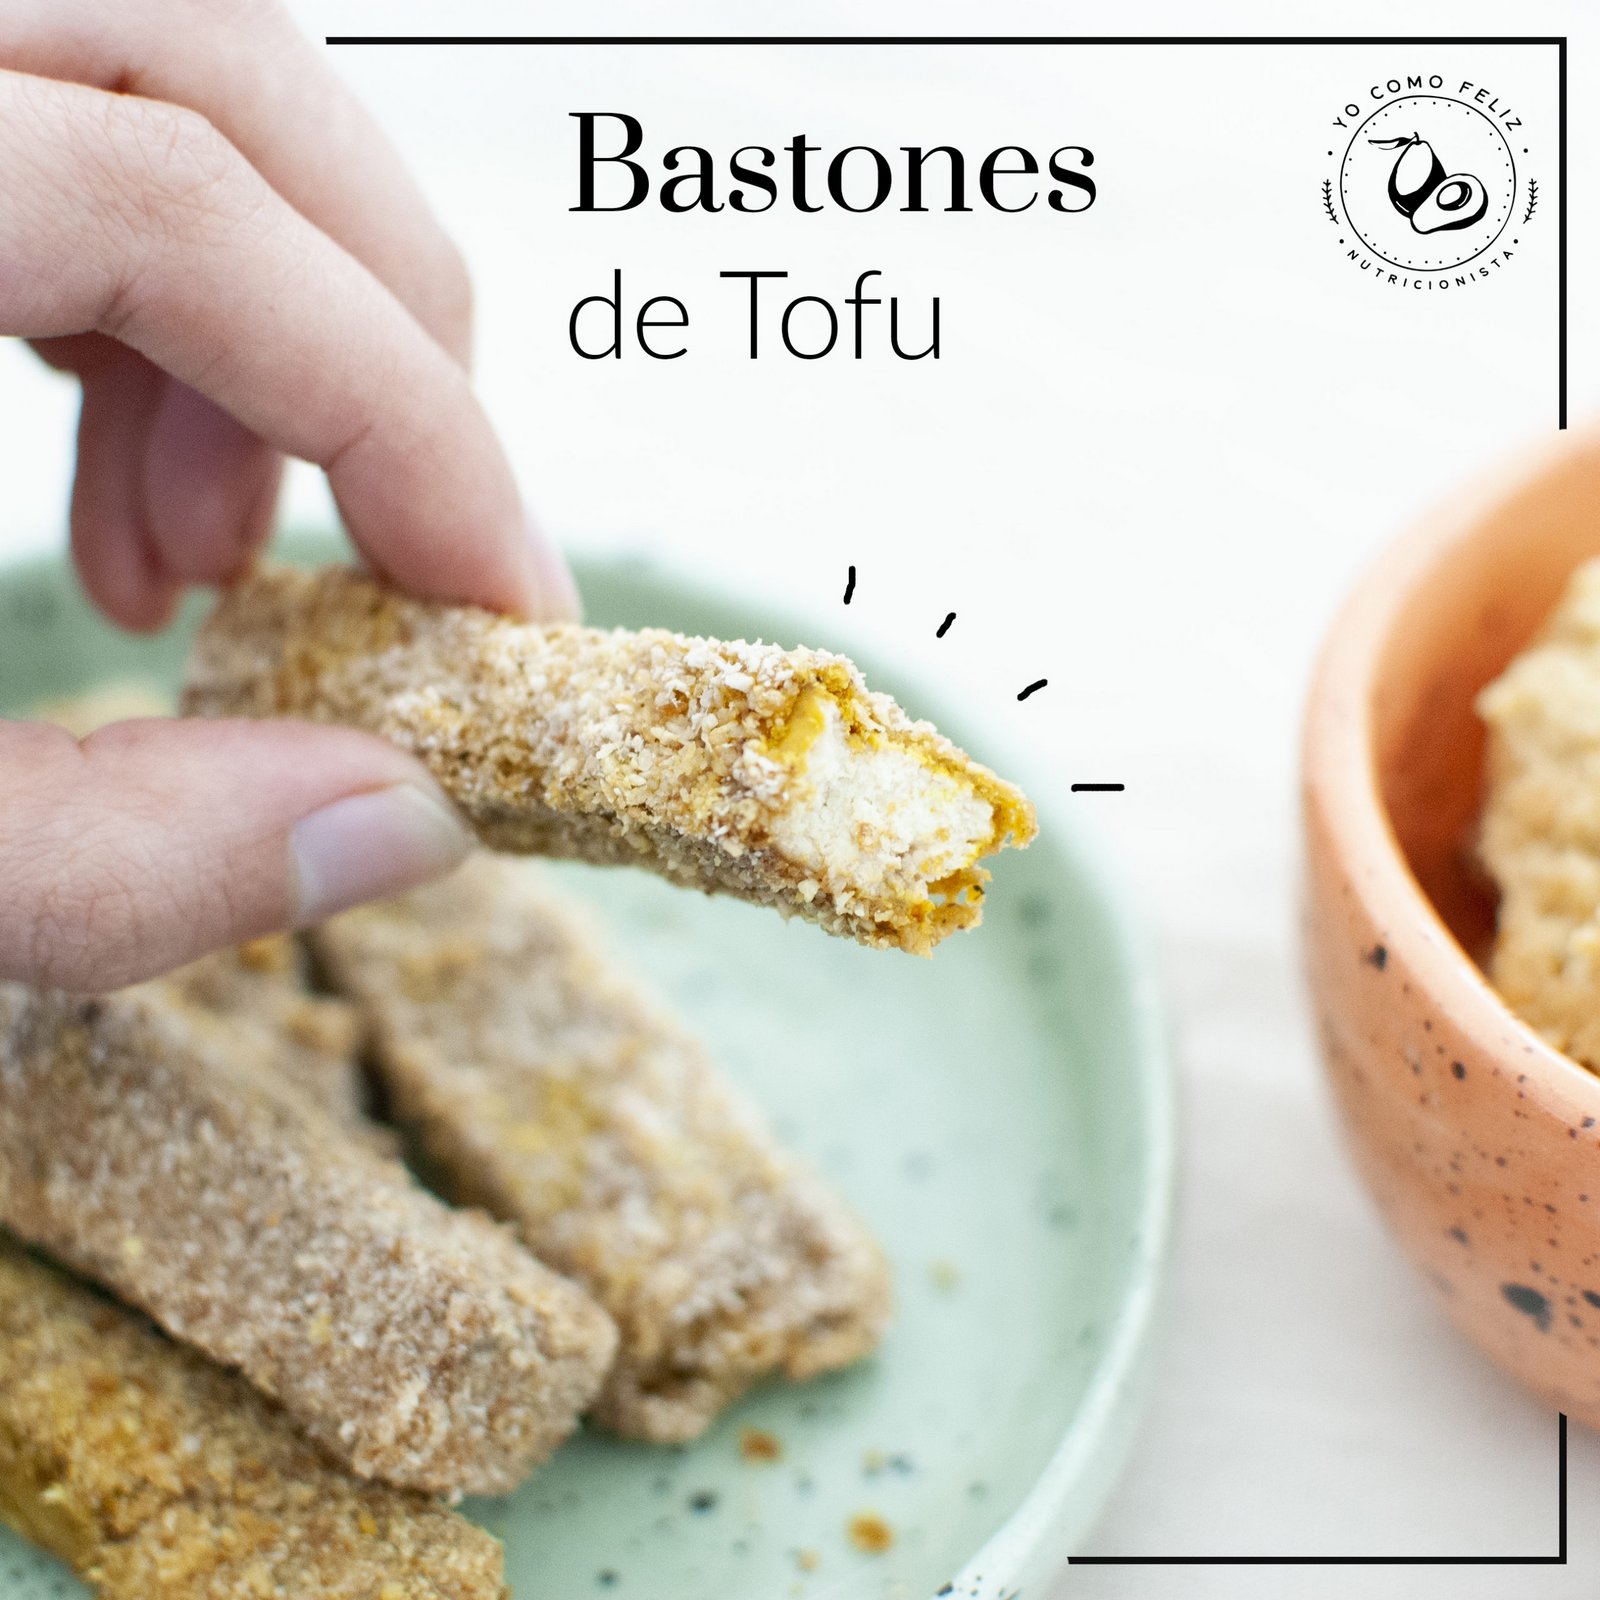 Bastones de Tofu